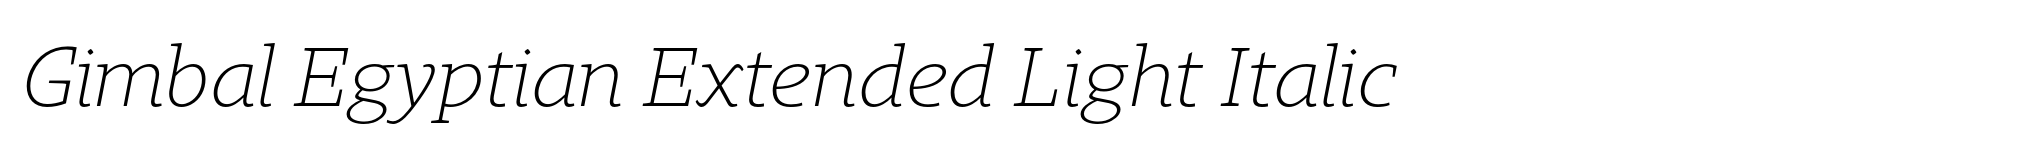 Gimbal Egyptian Extended Light Italic image